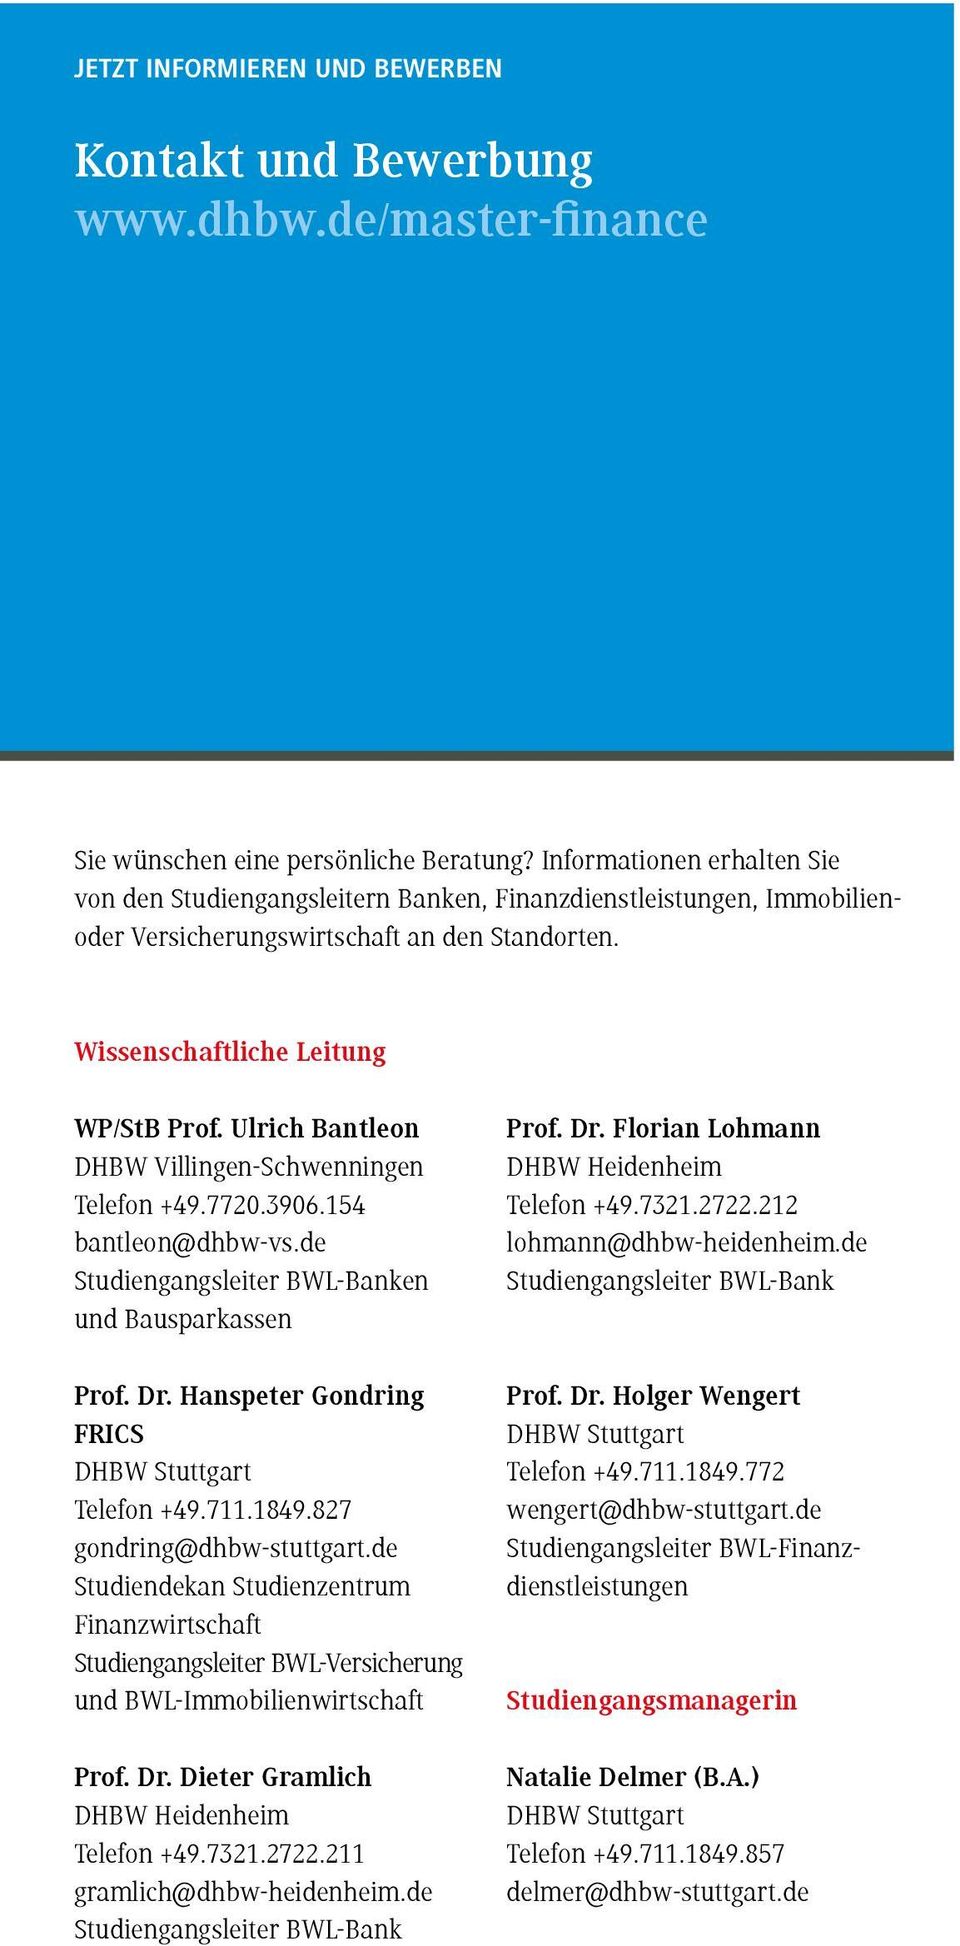 Ulrich Bantleon DHBW Villingen-Schwenningen Telefon +49.7720.3906.154 bantleon@dhbw-vs.de Studiengangsleiter BWL-Banken und Bausparkassen Prof. Dr. Hanspeter Gondring FRICS DHBW Stuttgart Telefon +49.